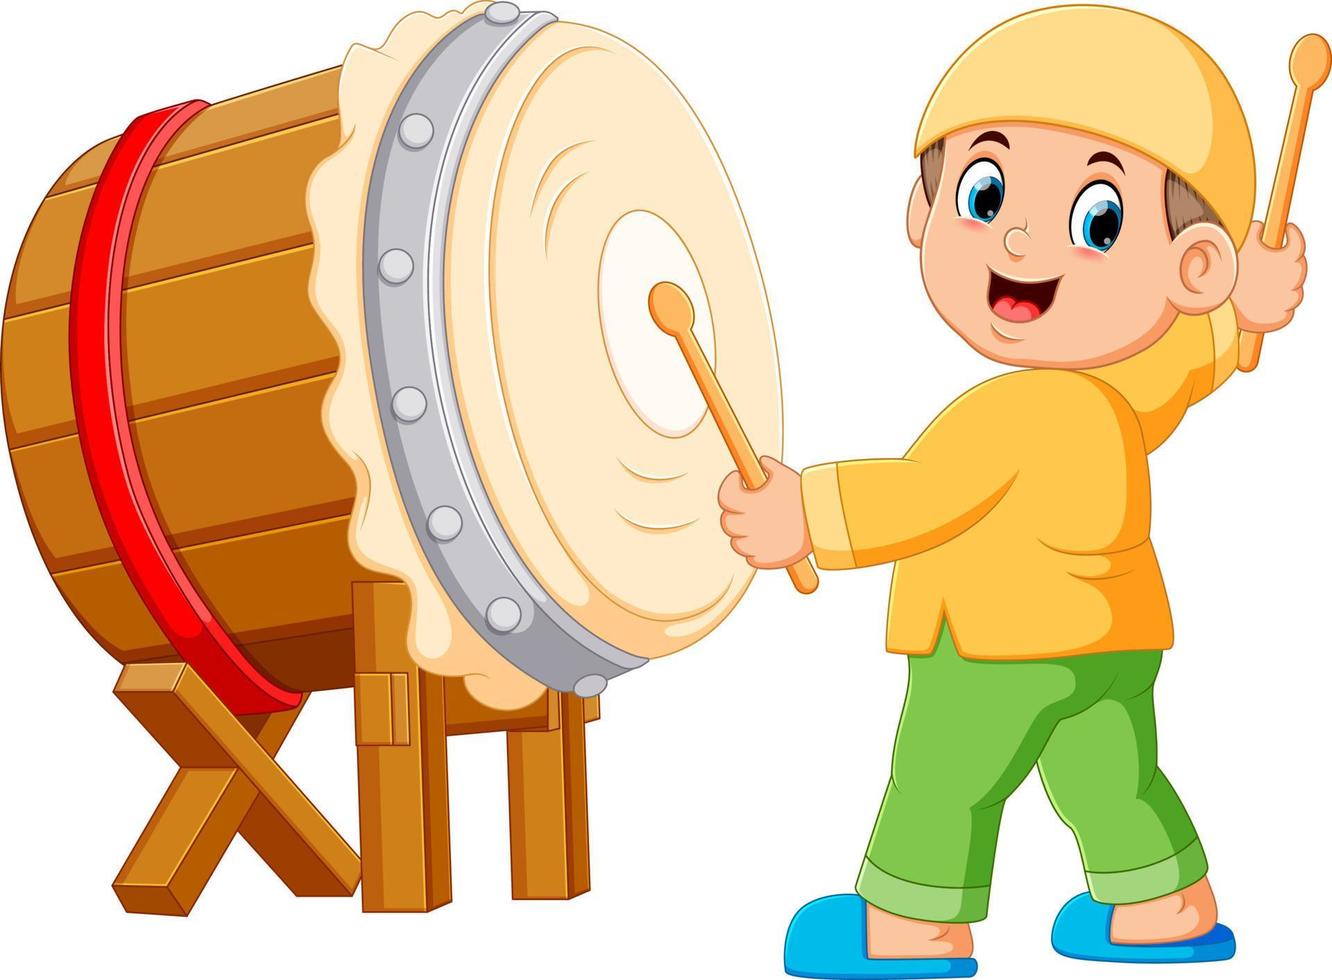 A boy playing bedug cartoon vector